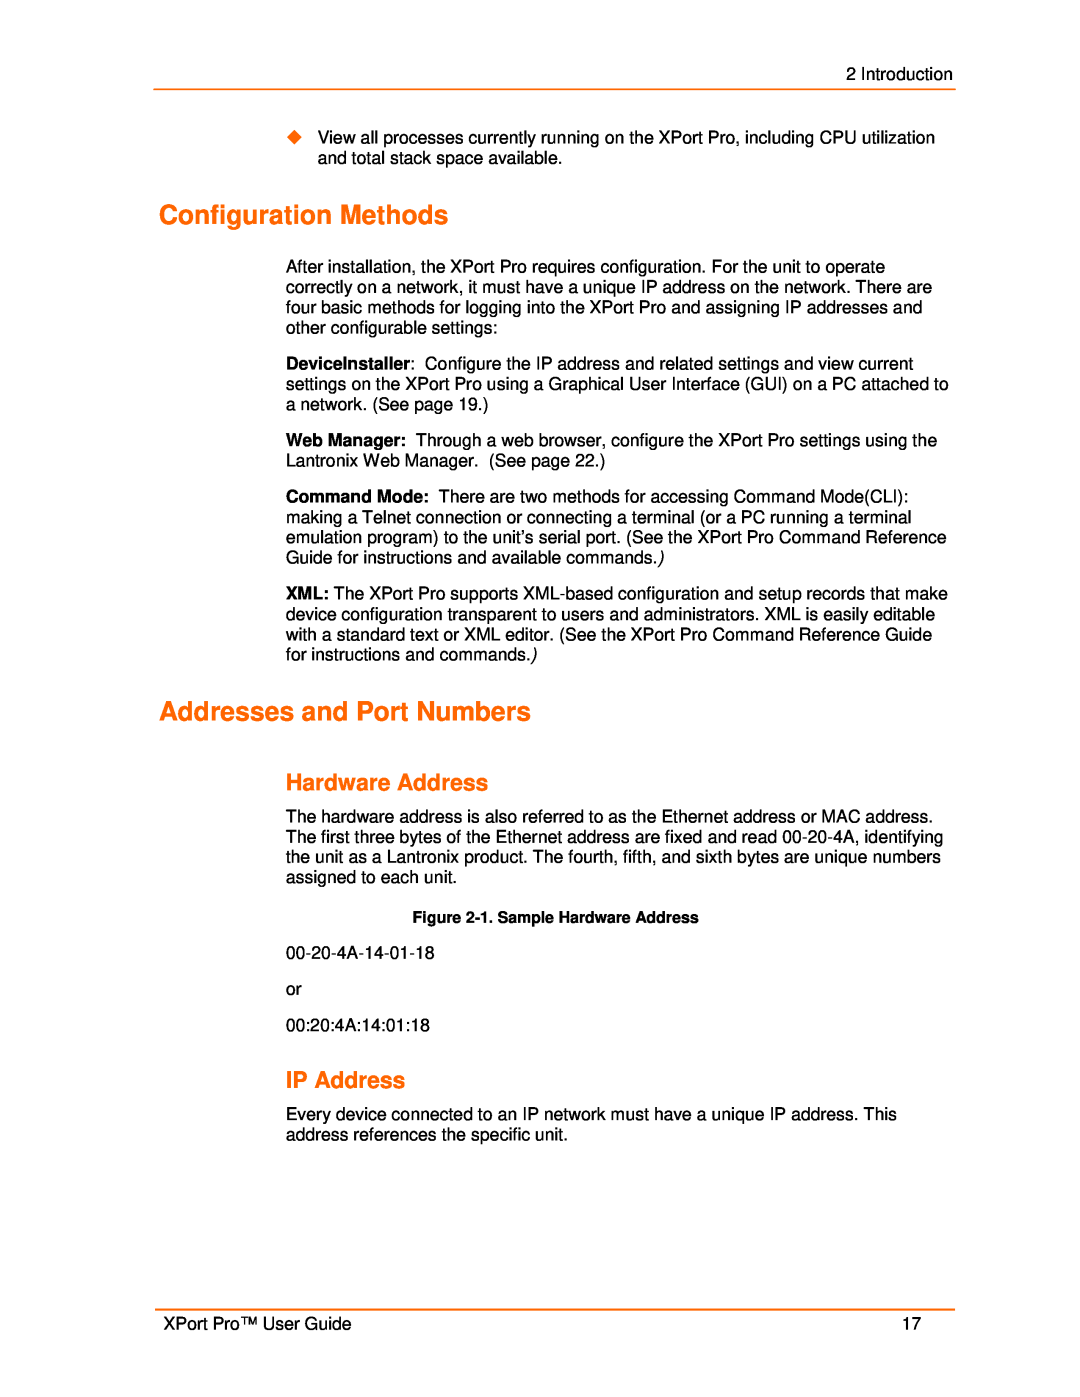 Lantronix 900-560 manual Configuration Methods, Addresses and Port Numbers, Hardware Address, IP Address 